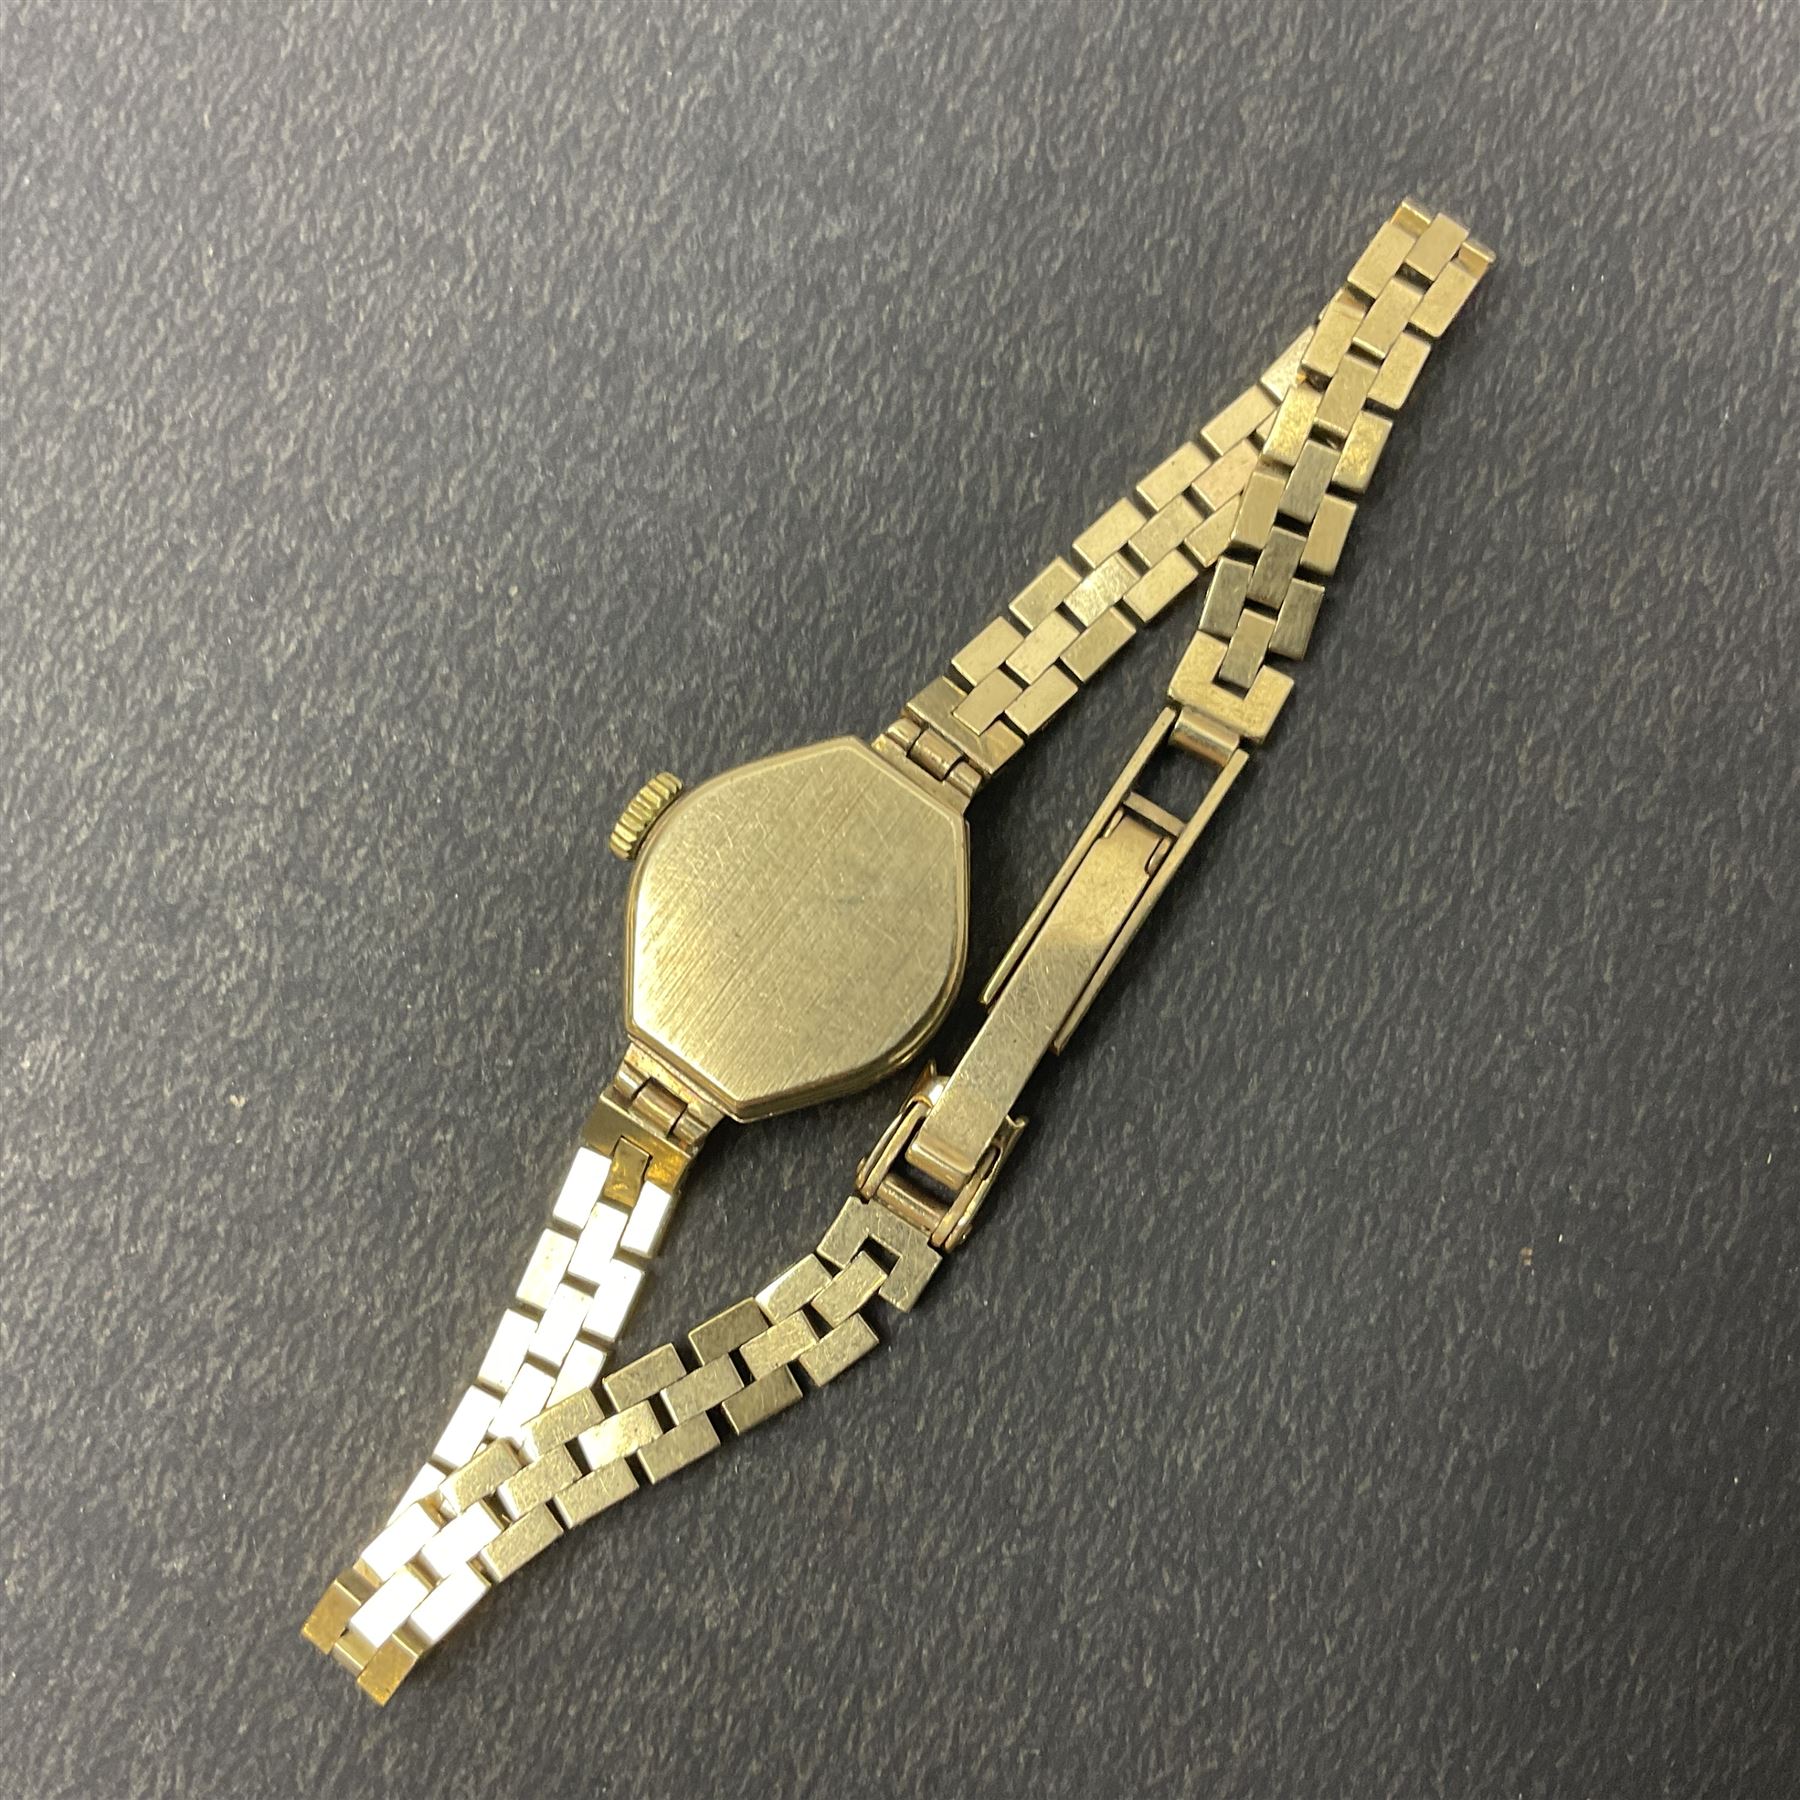 Roamer ladies 9ct gold manual wind wristwatch - Image 5 of 6